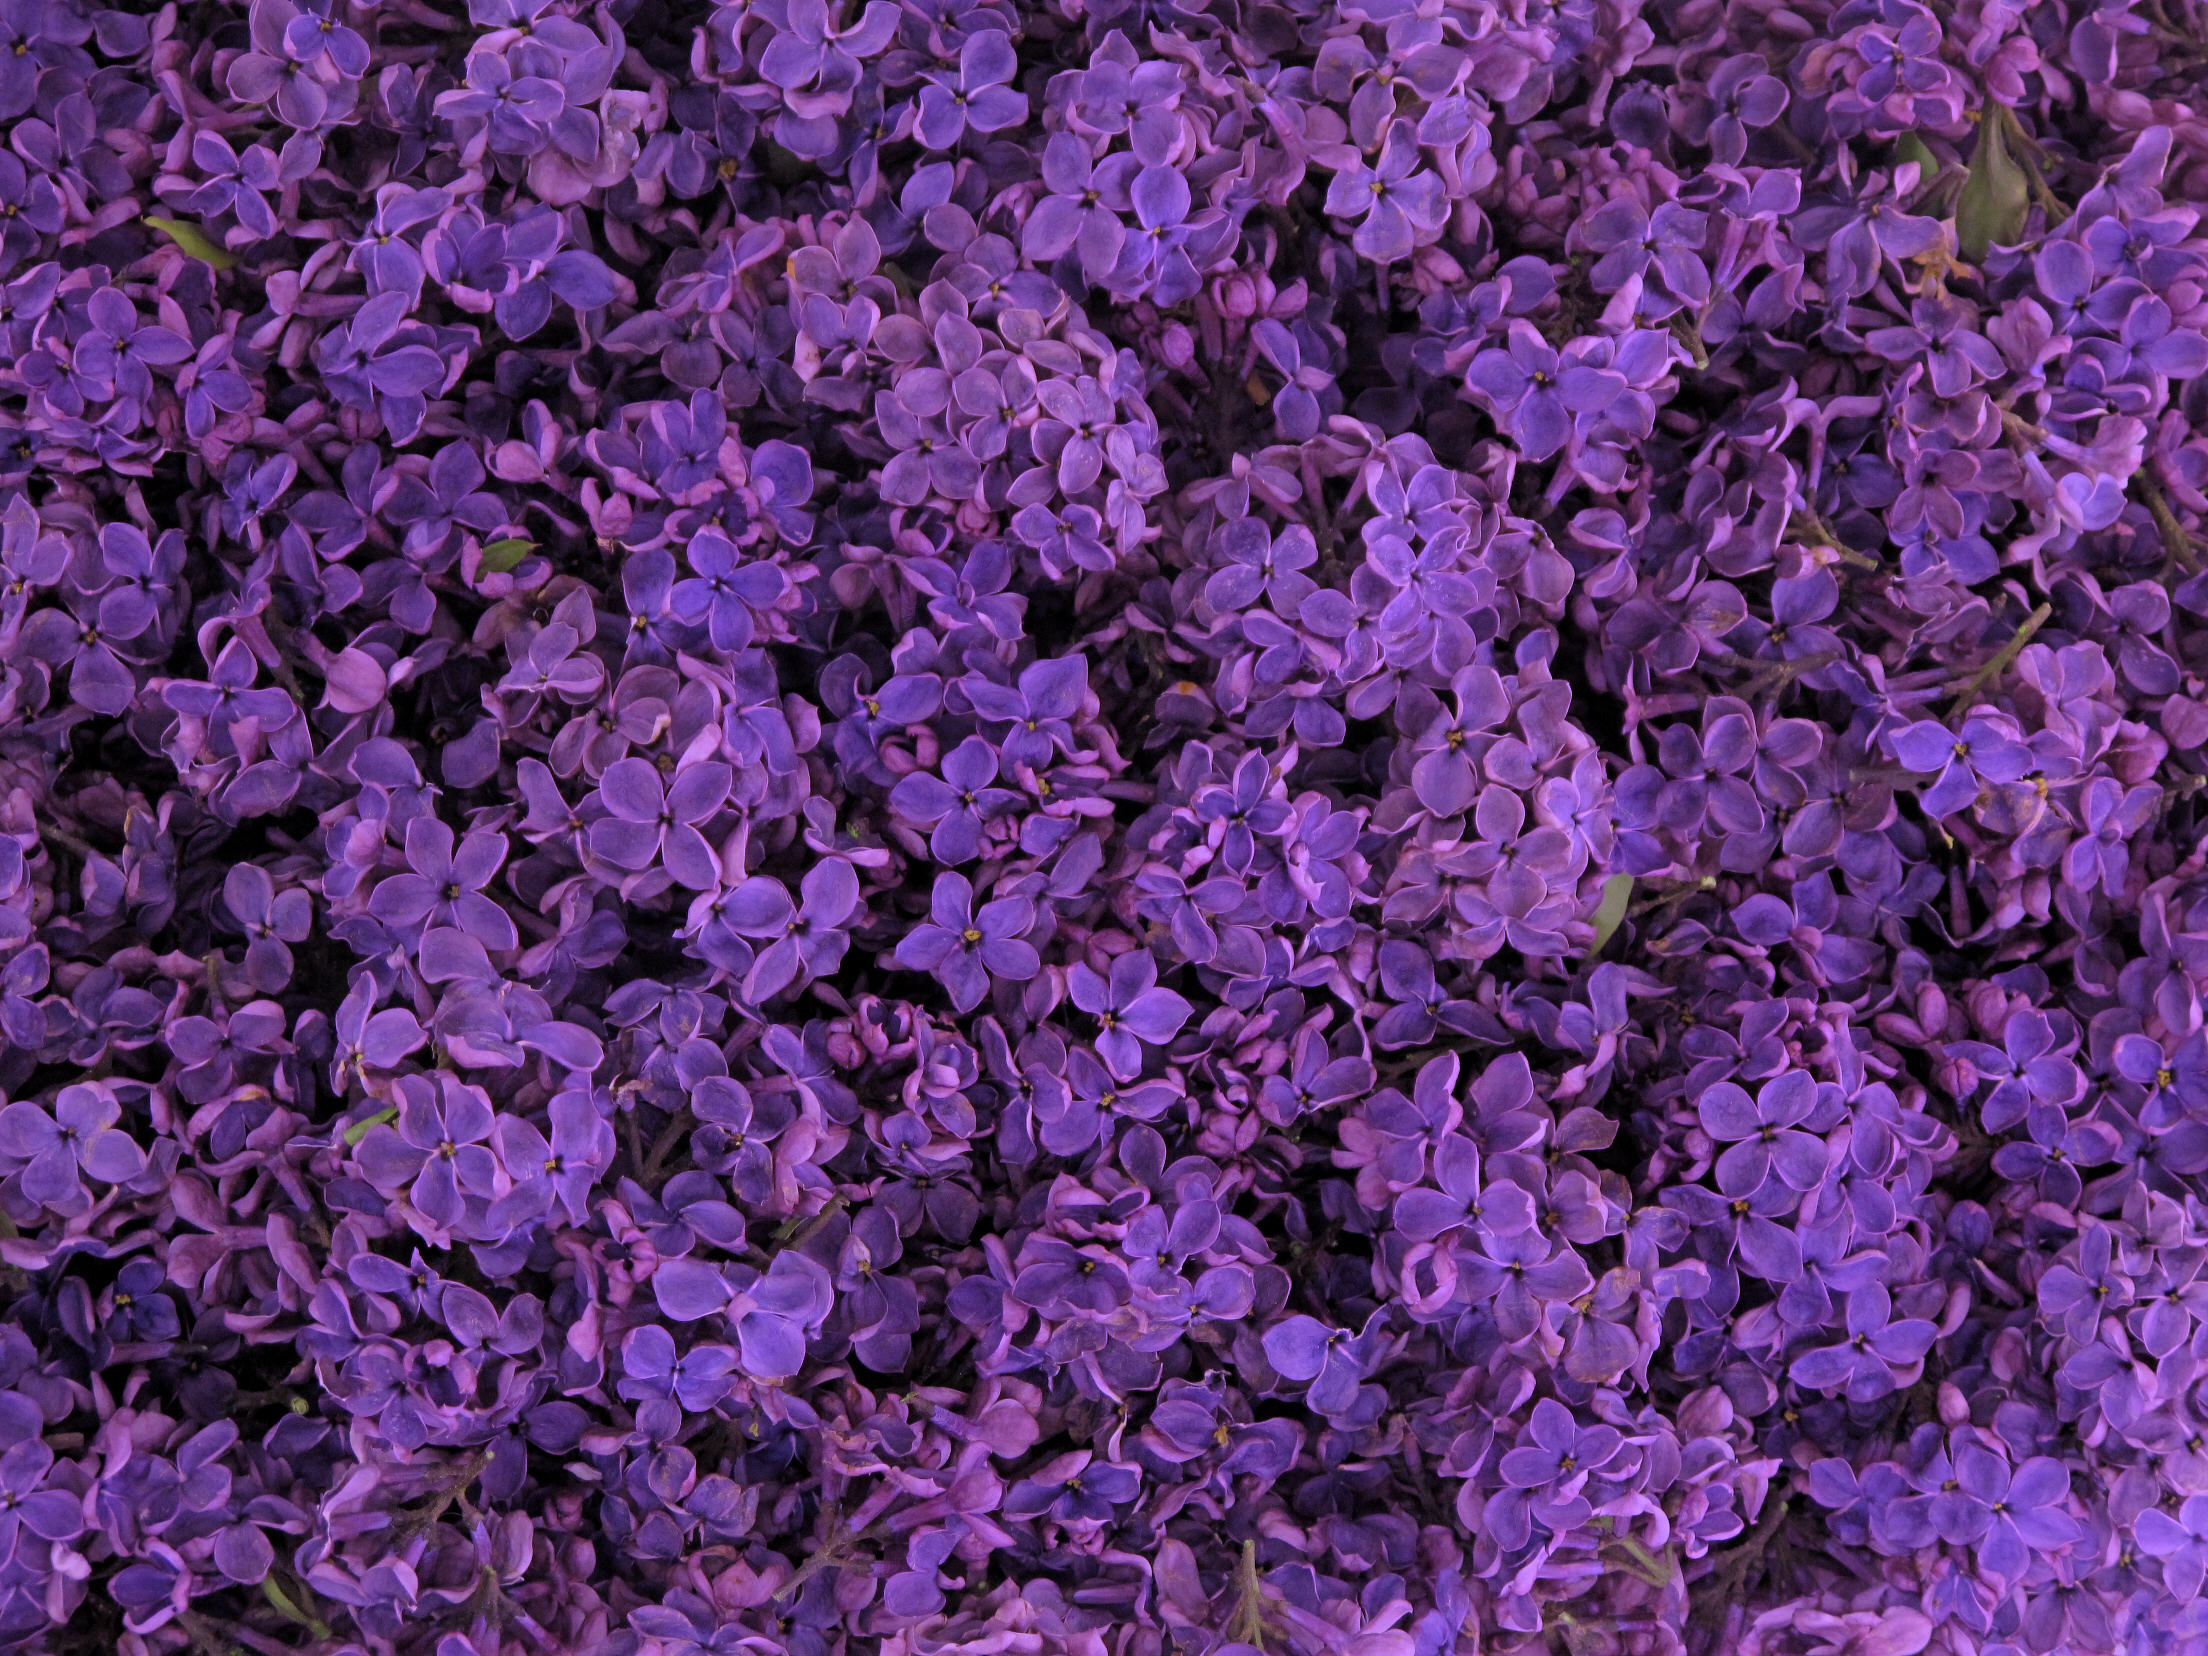 light lilac purple